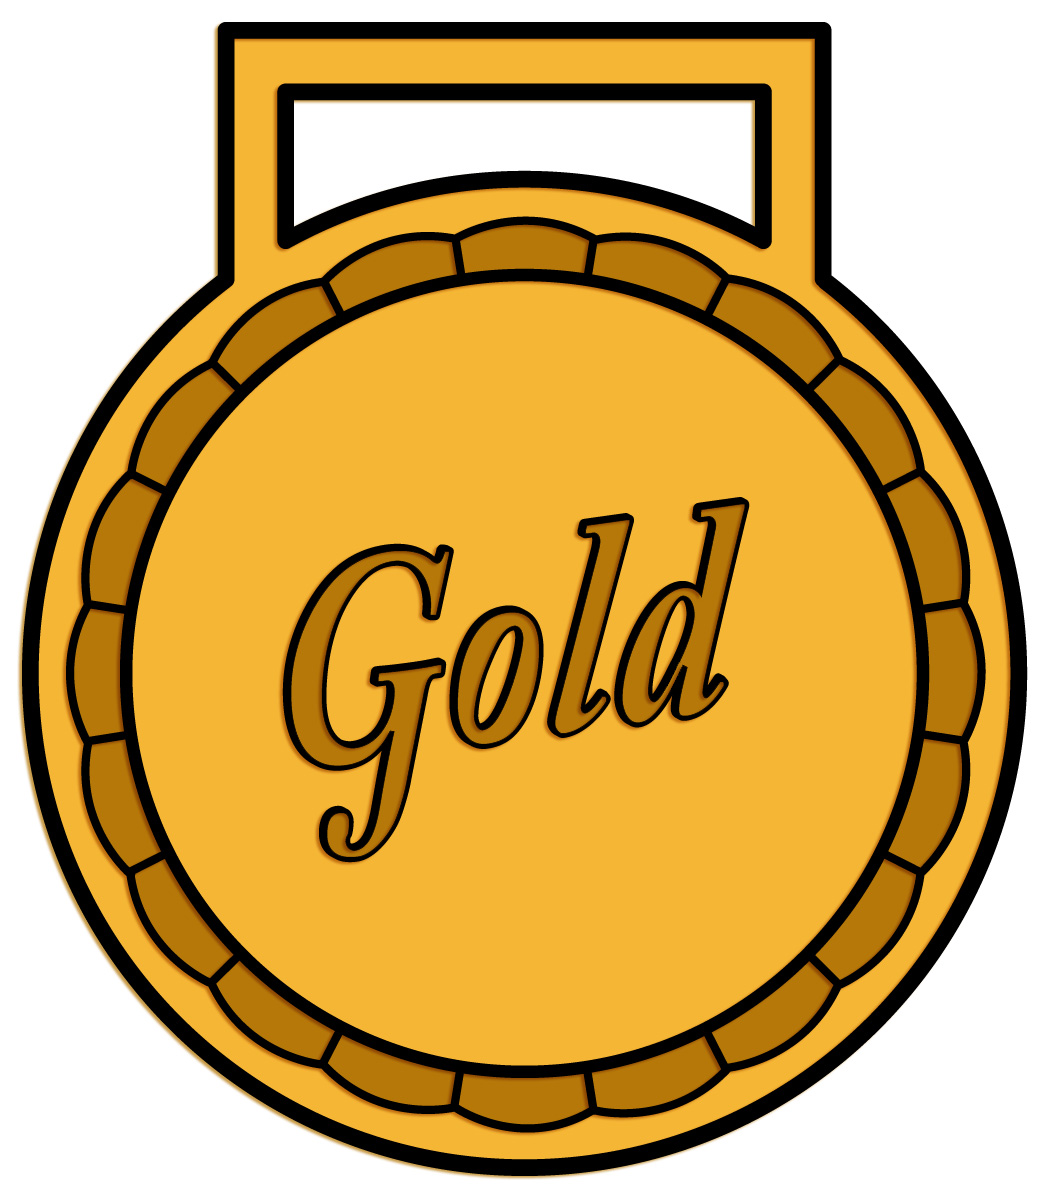 Gold Medal Vector